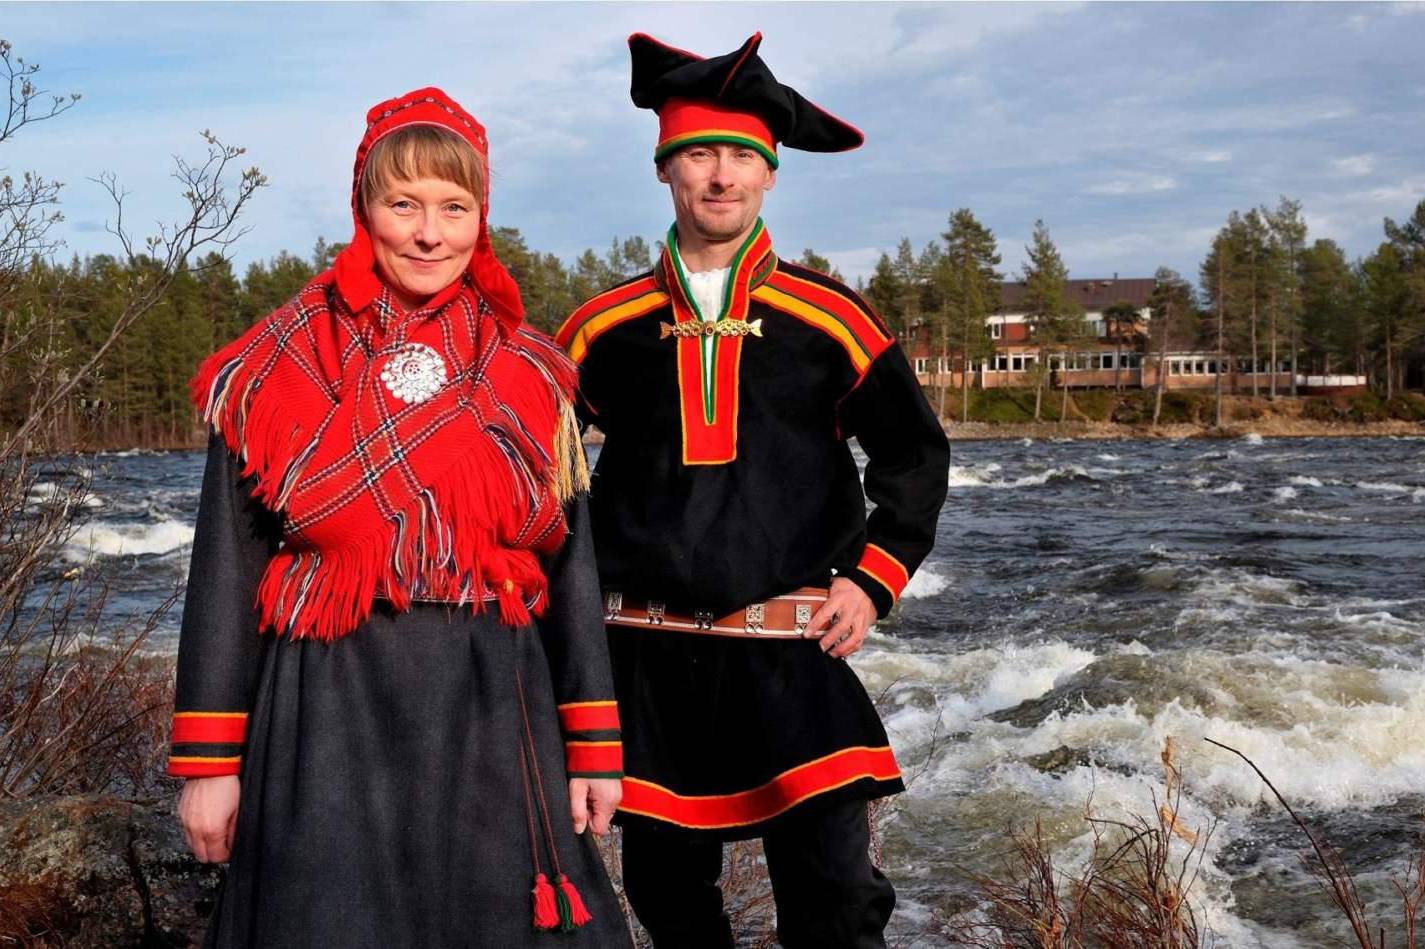 I Enare bor du på ett gammalt fint hotell som drivs av en samisk familj